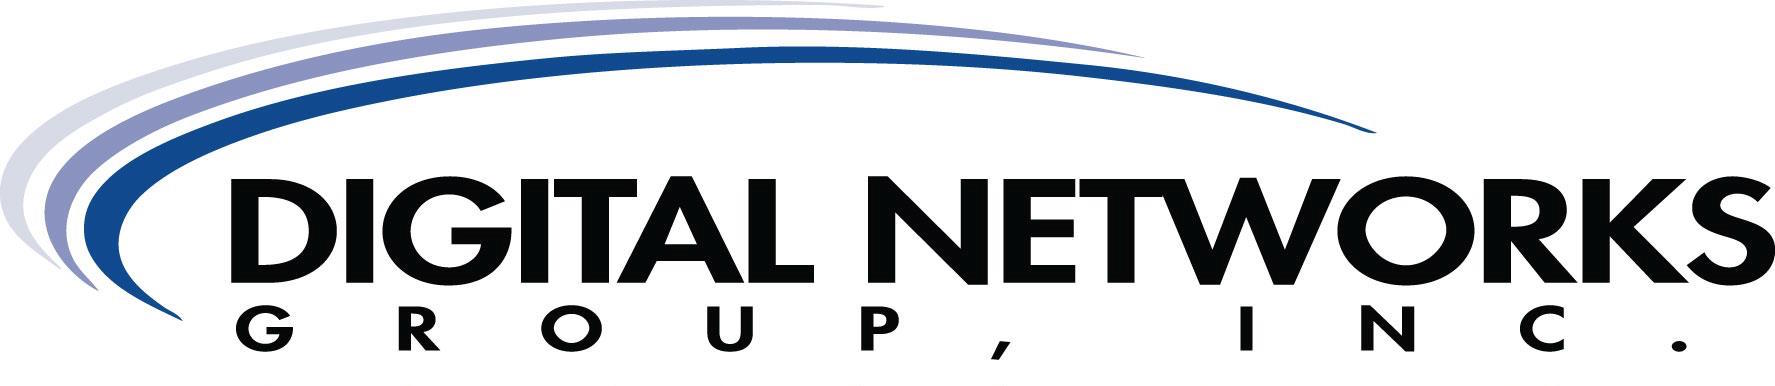 Digital Networking Logo photo - 1